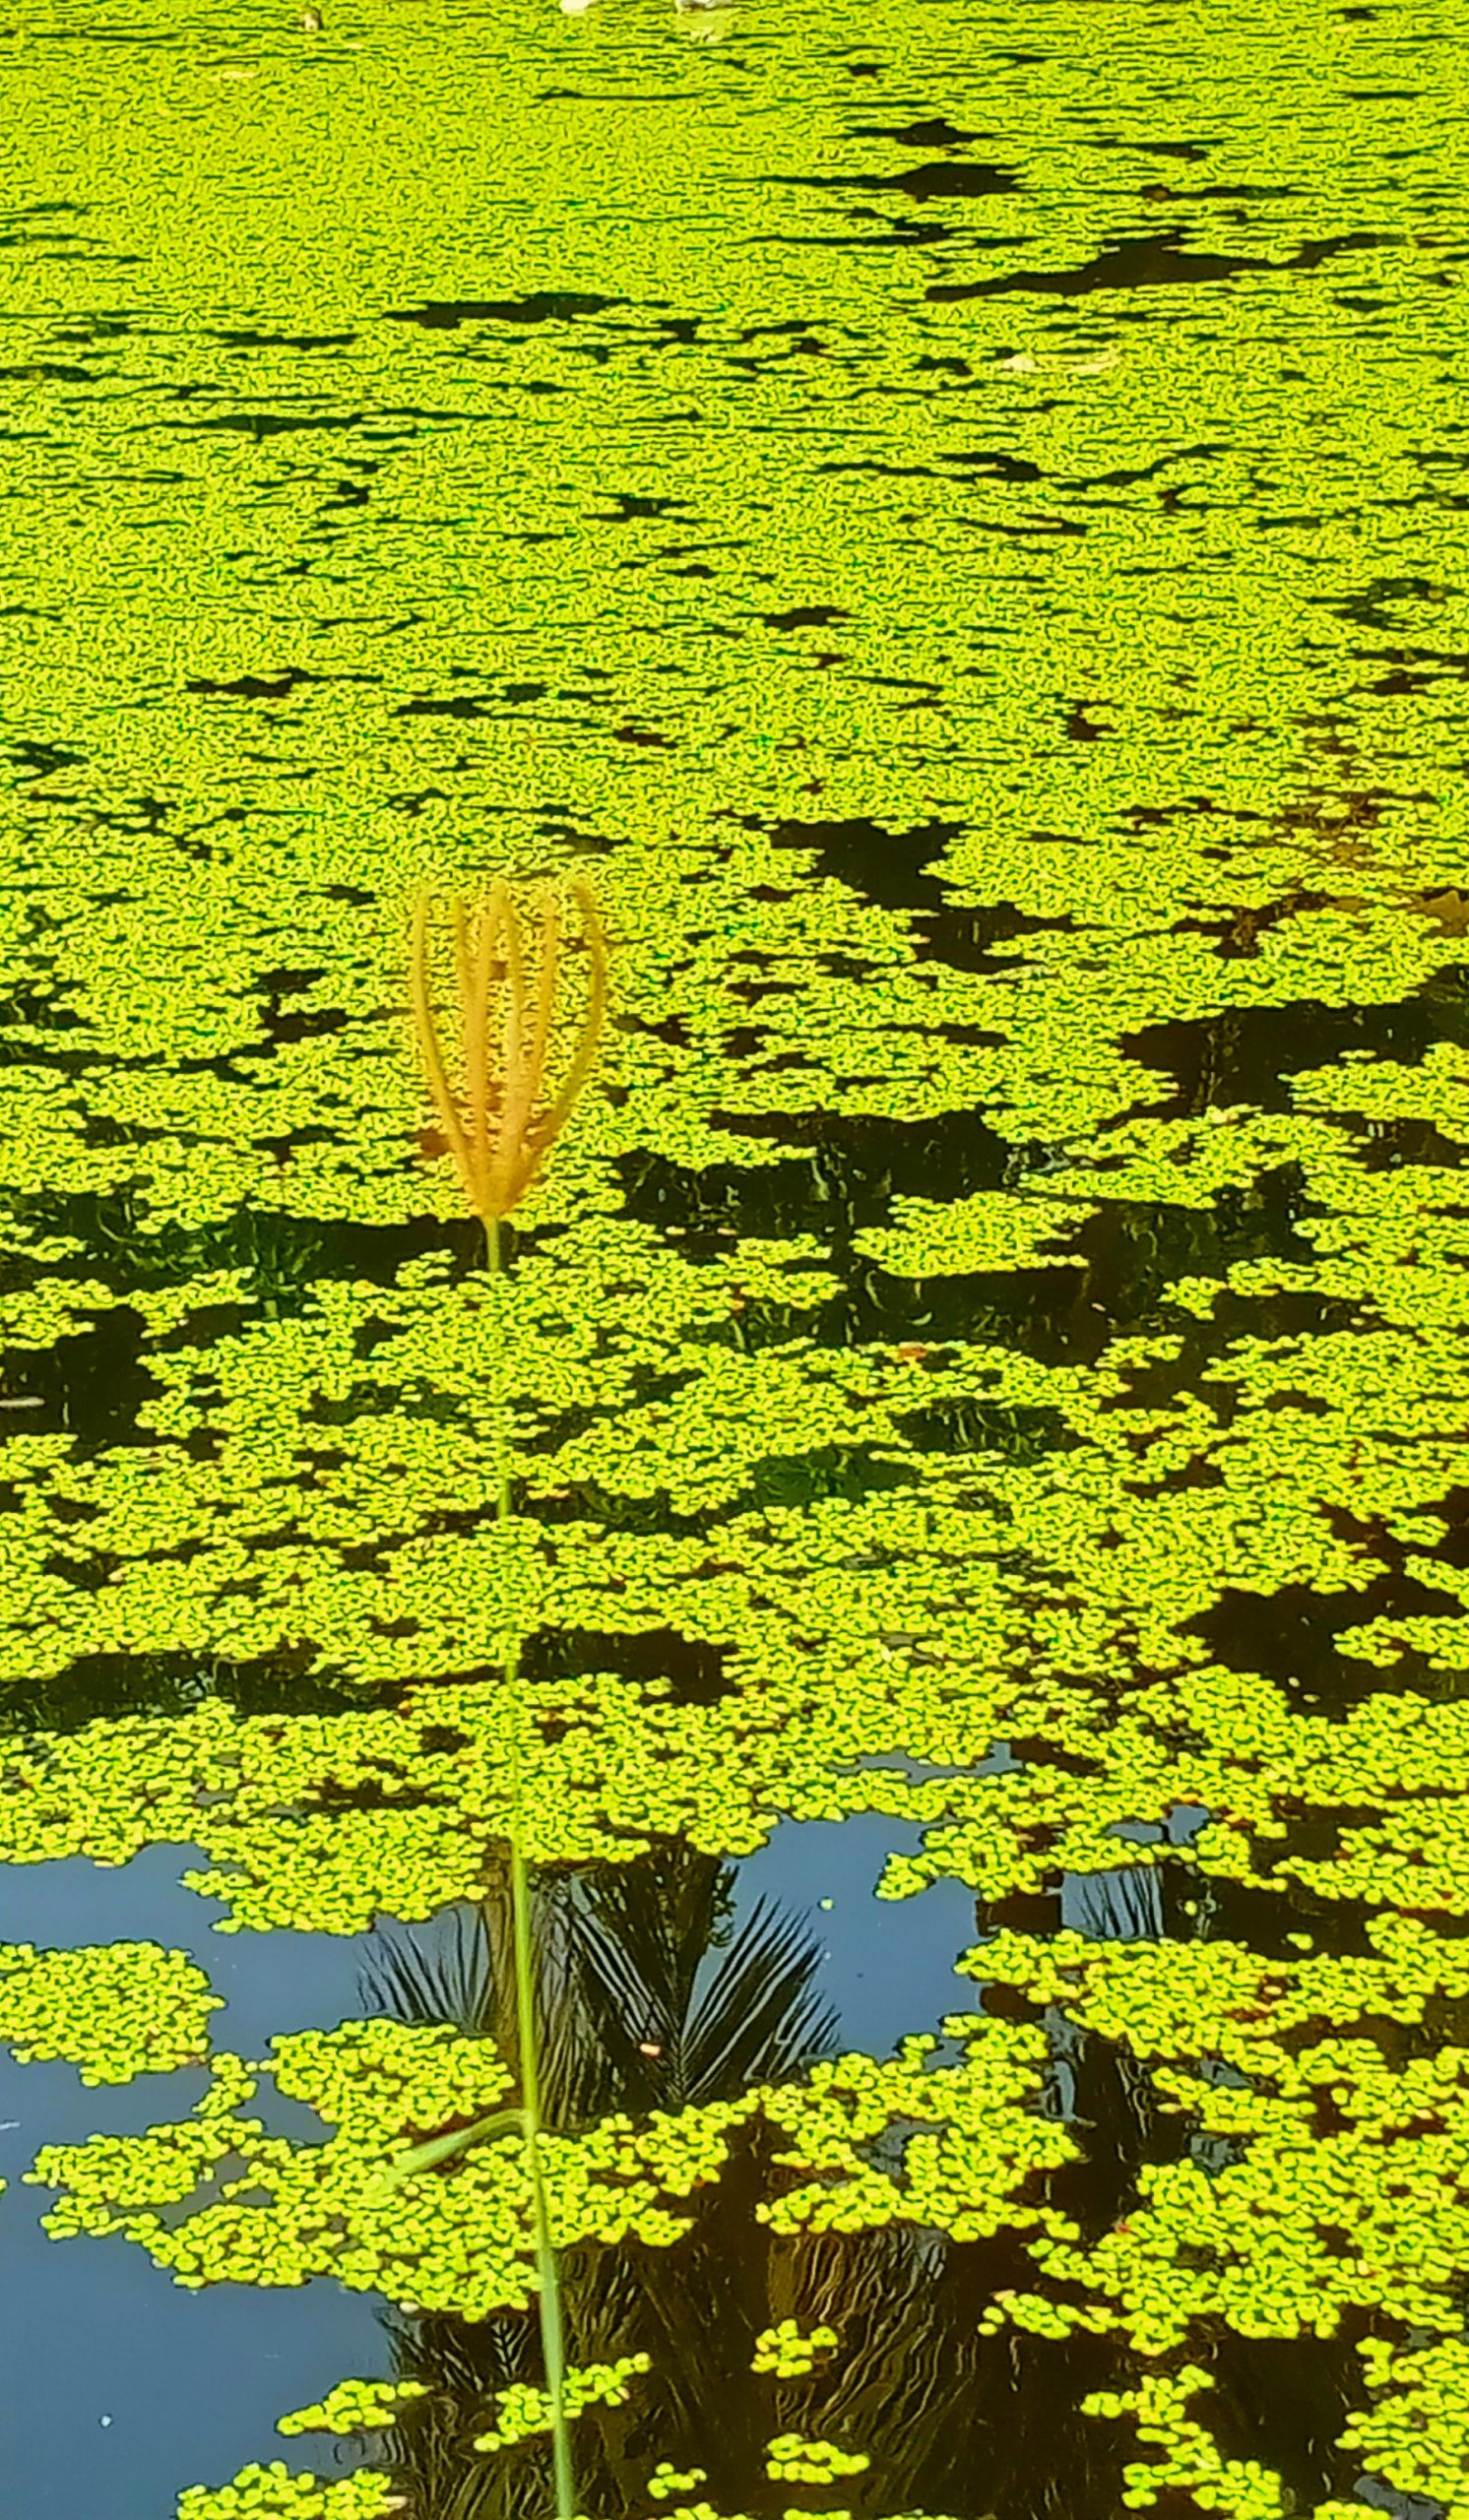 Aquatic plants in a pond